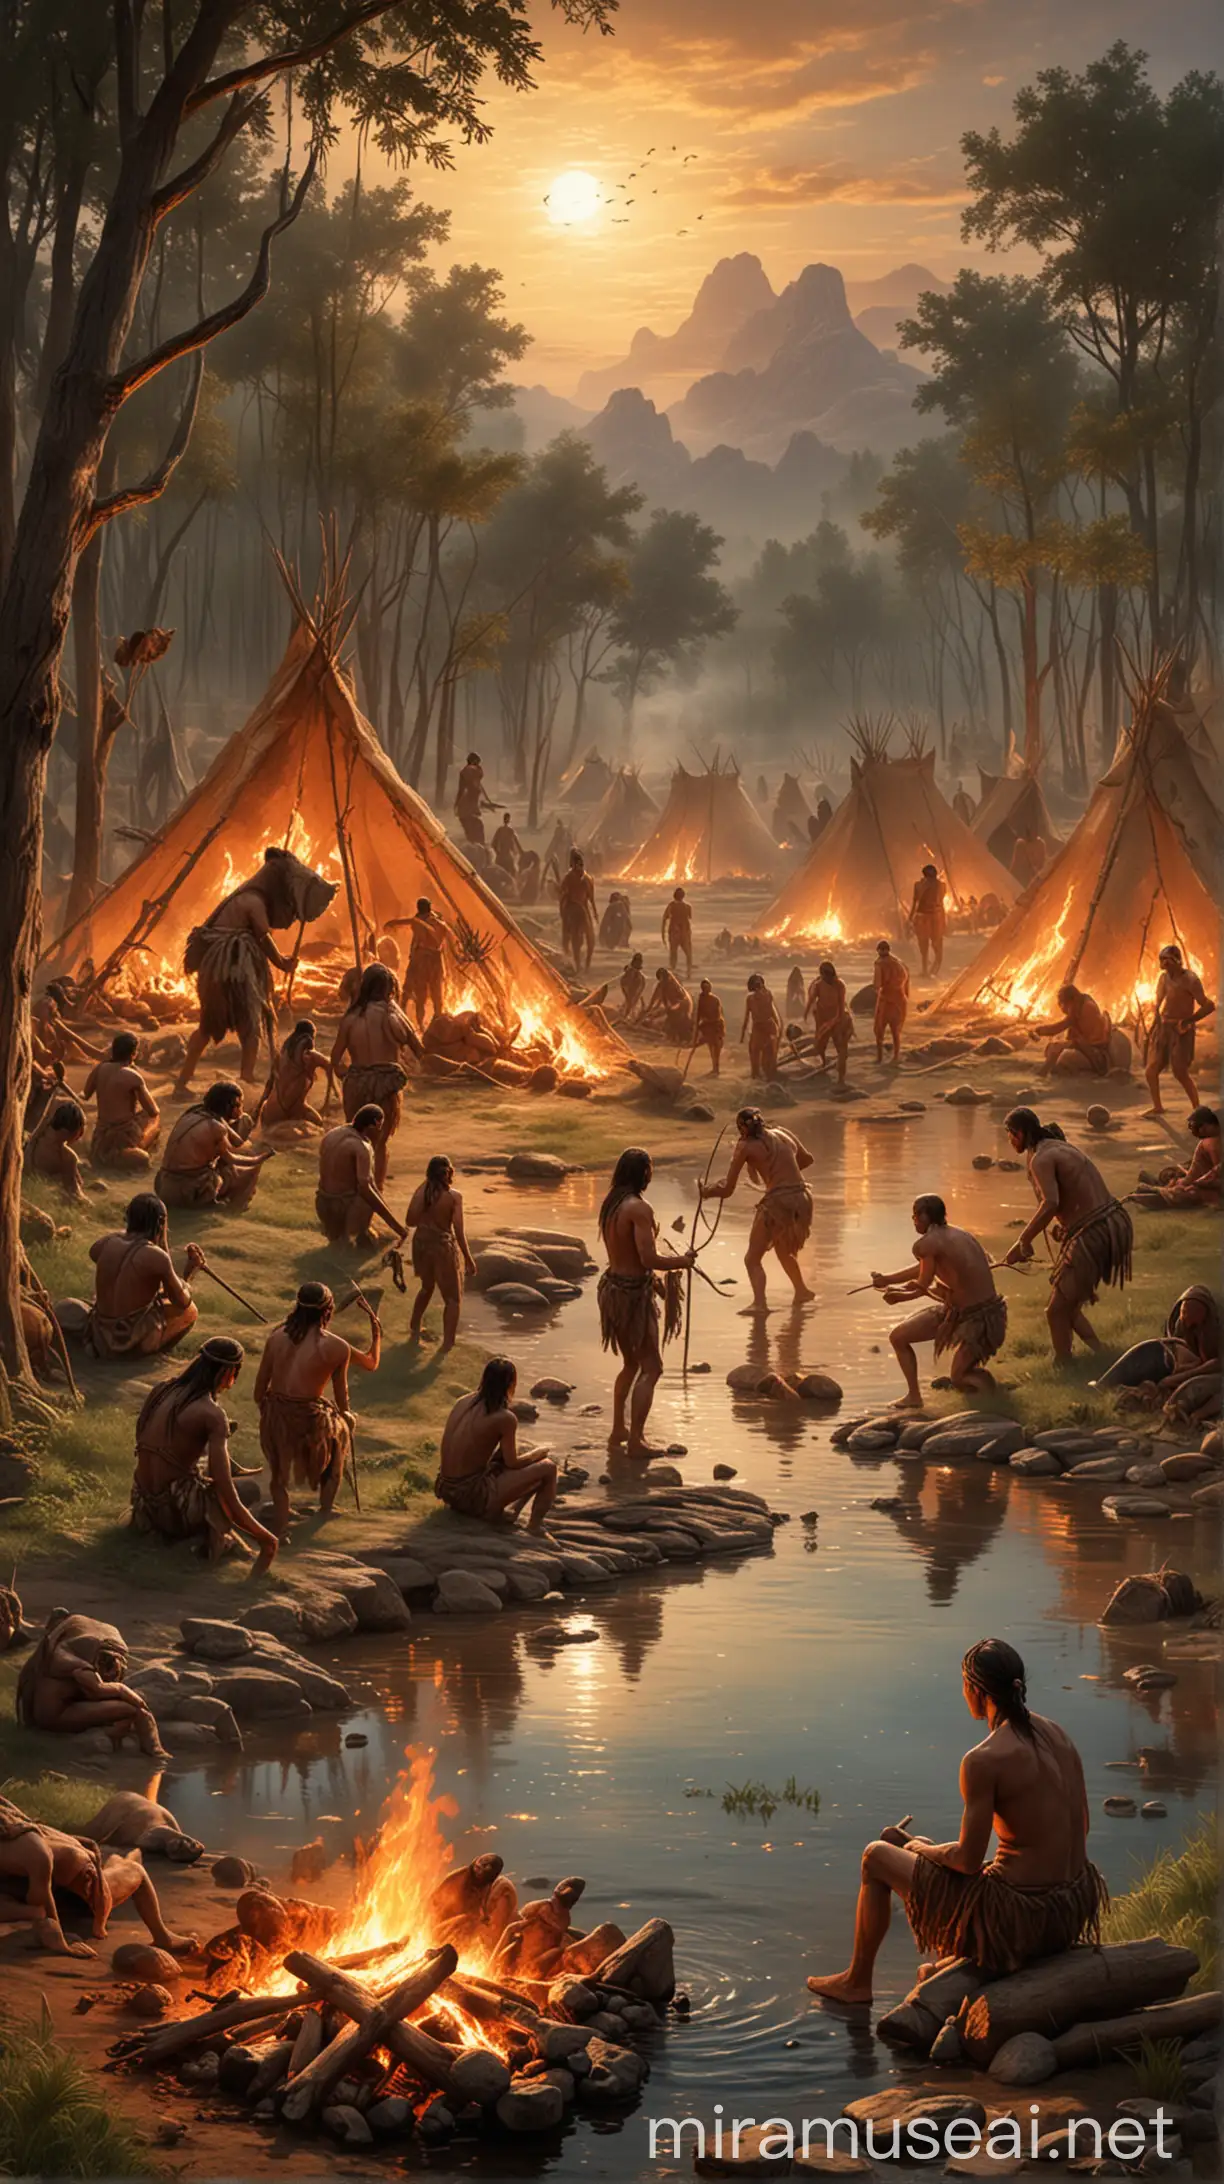 Ancient HunterGatherer Community Gathering Hunting and Fireside Bonding